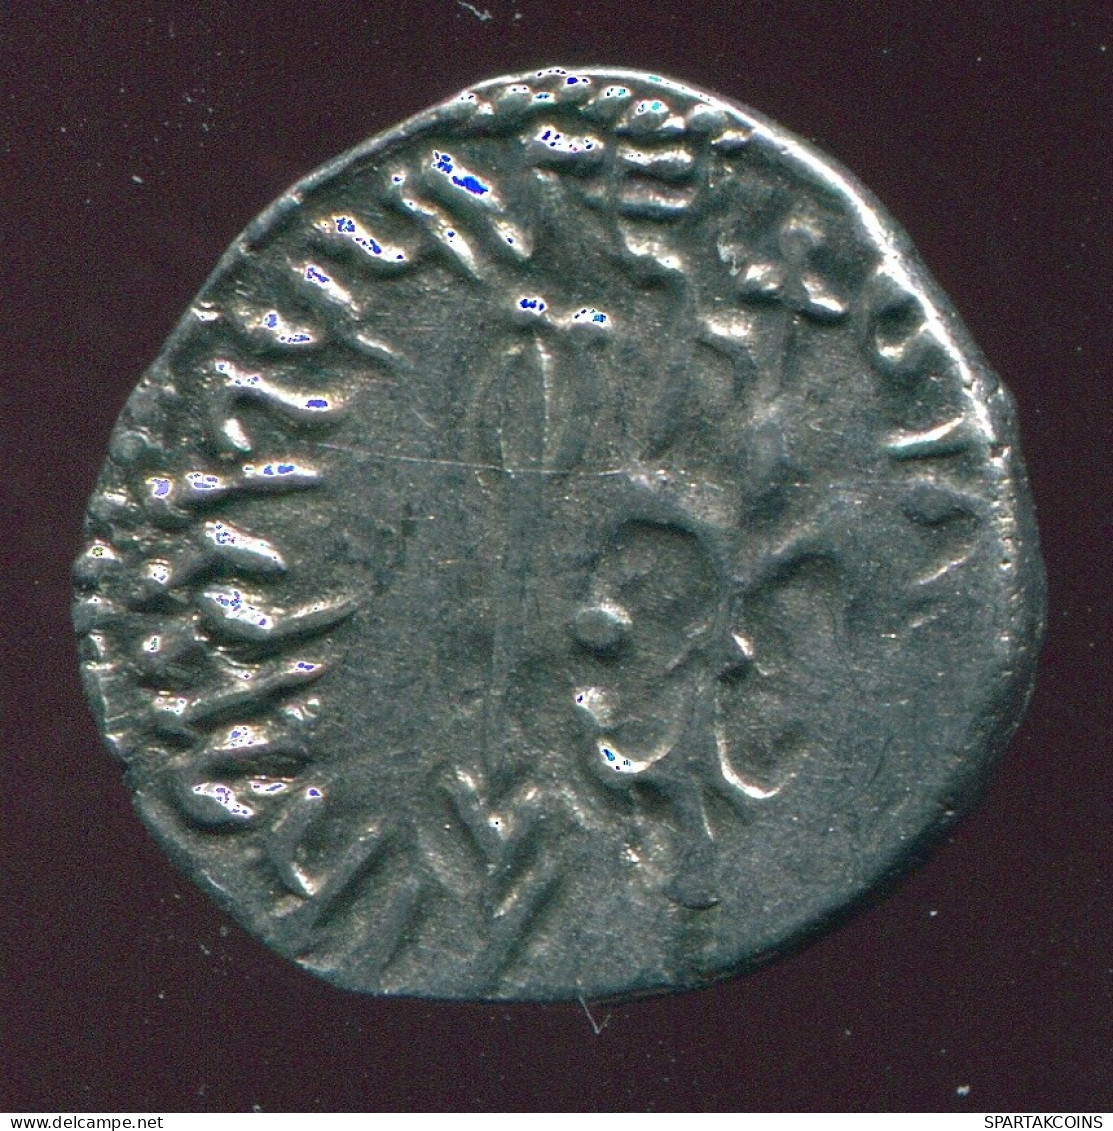 INDO-SKYTHIANS KSHATRAPAS King NAHAPANA AR Drachm 2.2g/15mm GRIECHISCHE Münze #GRK1558.33.D.A - Griechische Münzen